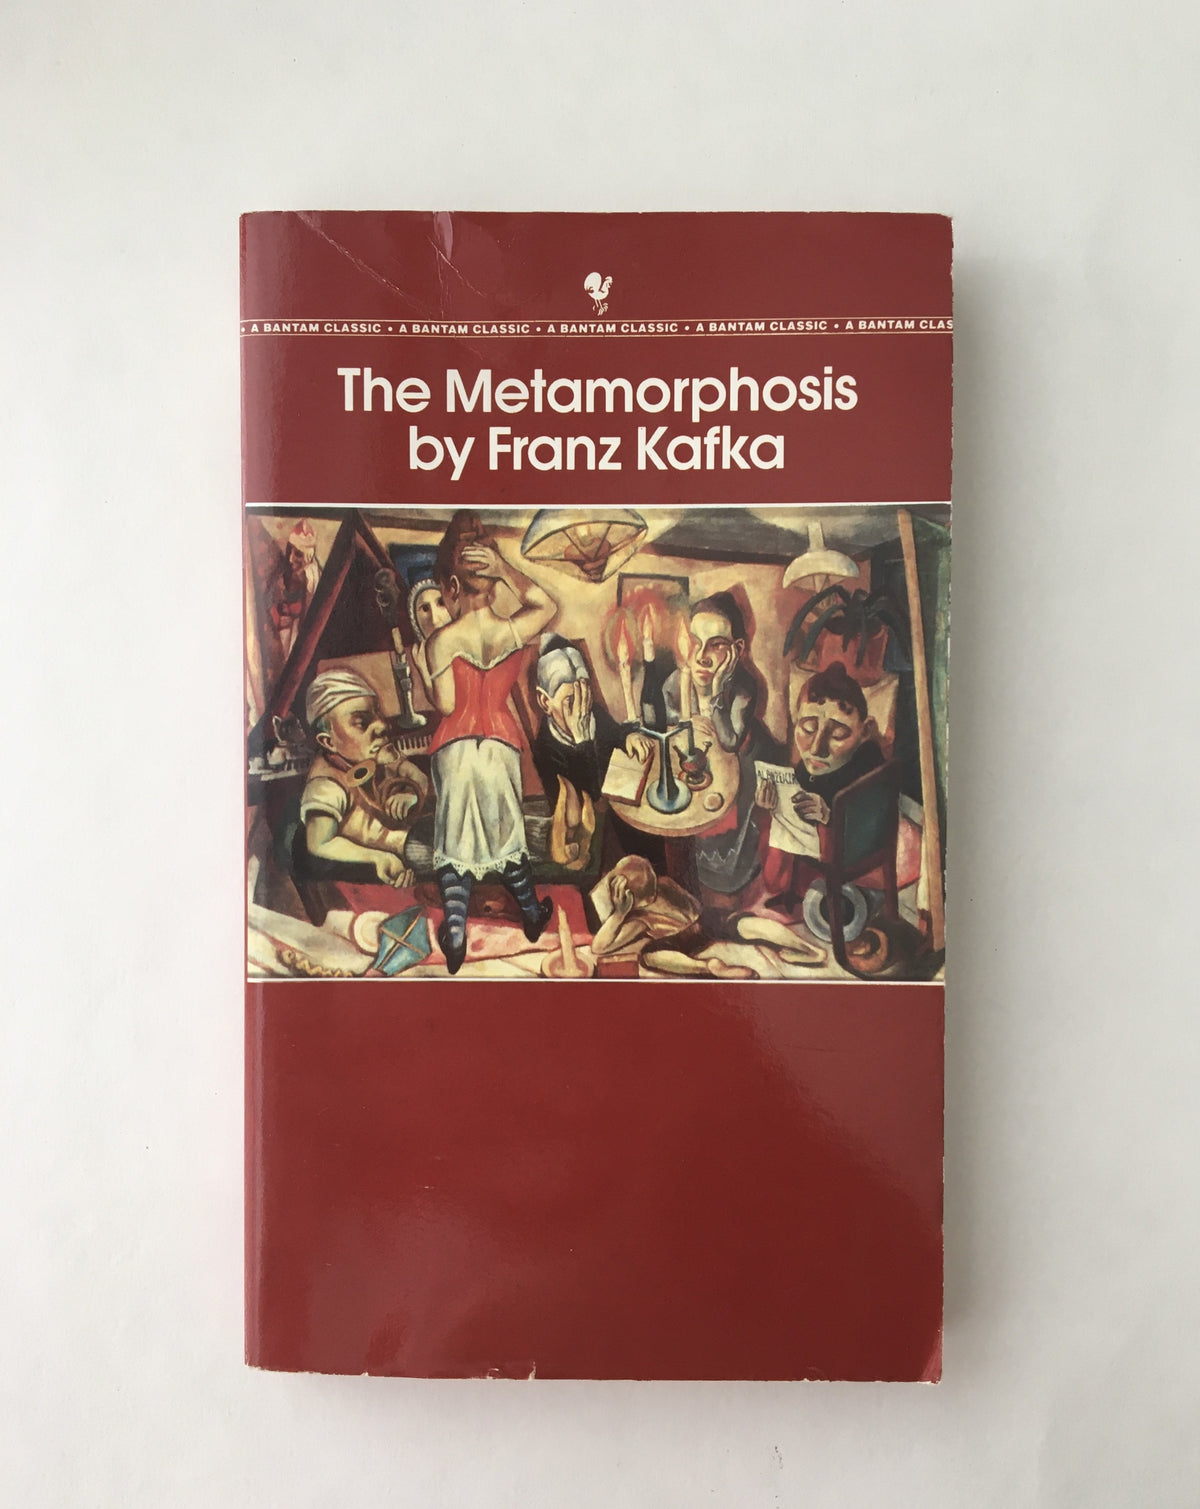 Donate: The Metamorphosis by Franz Kafka